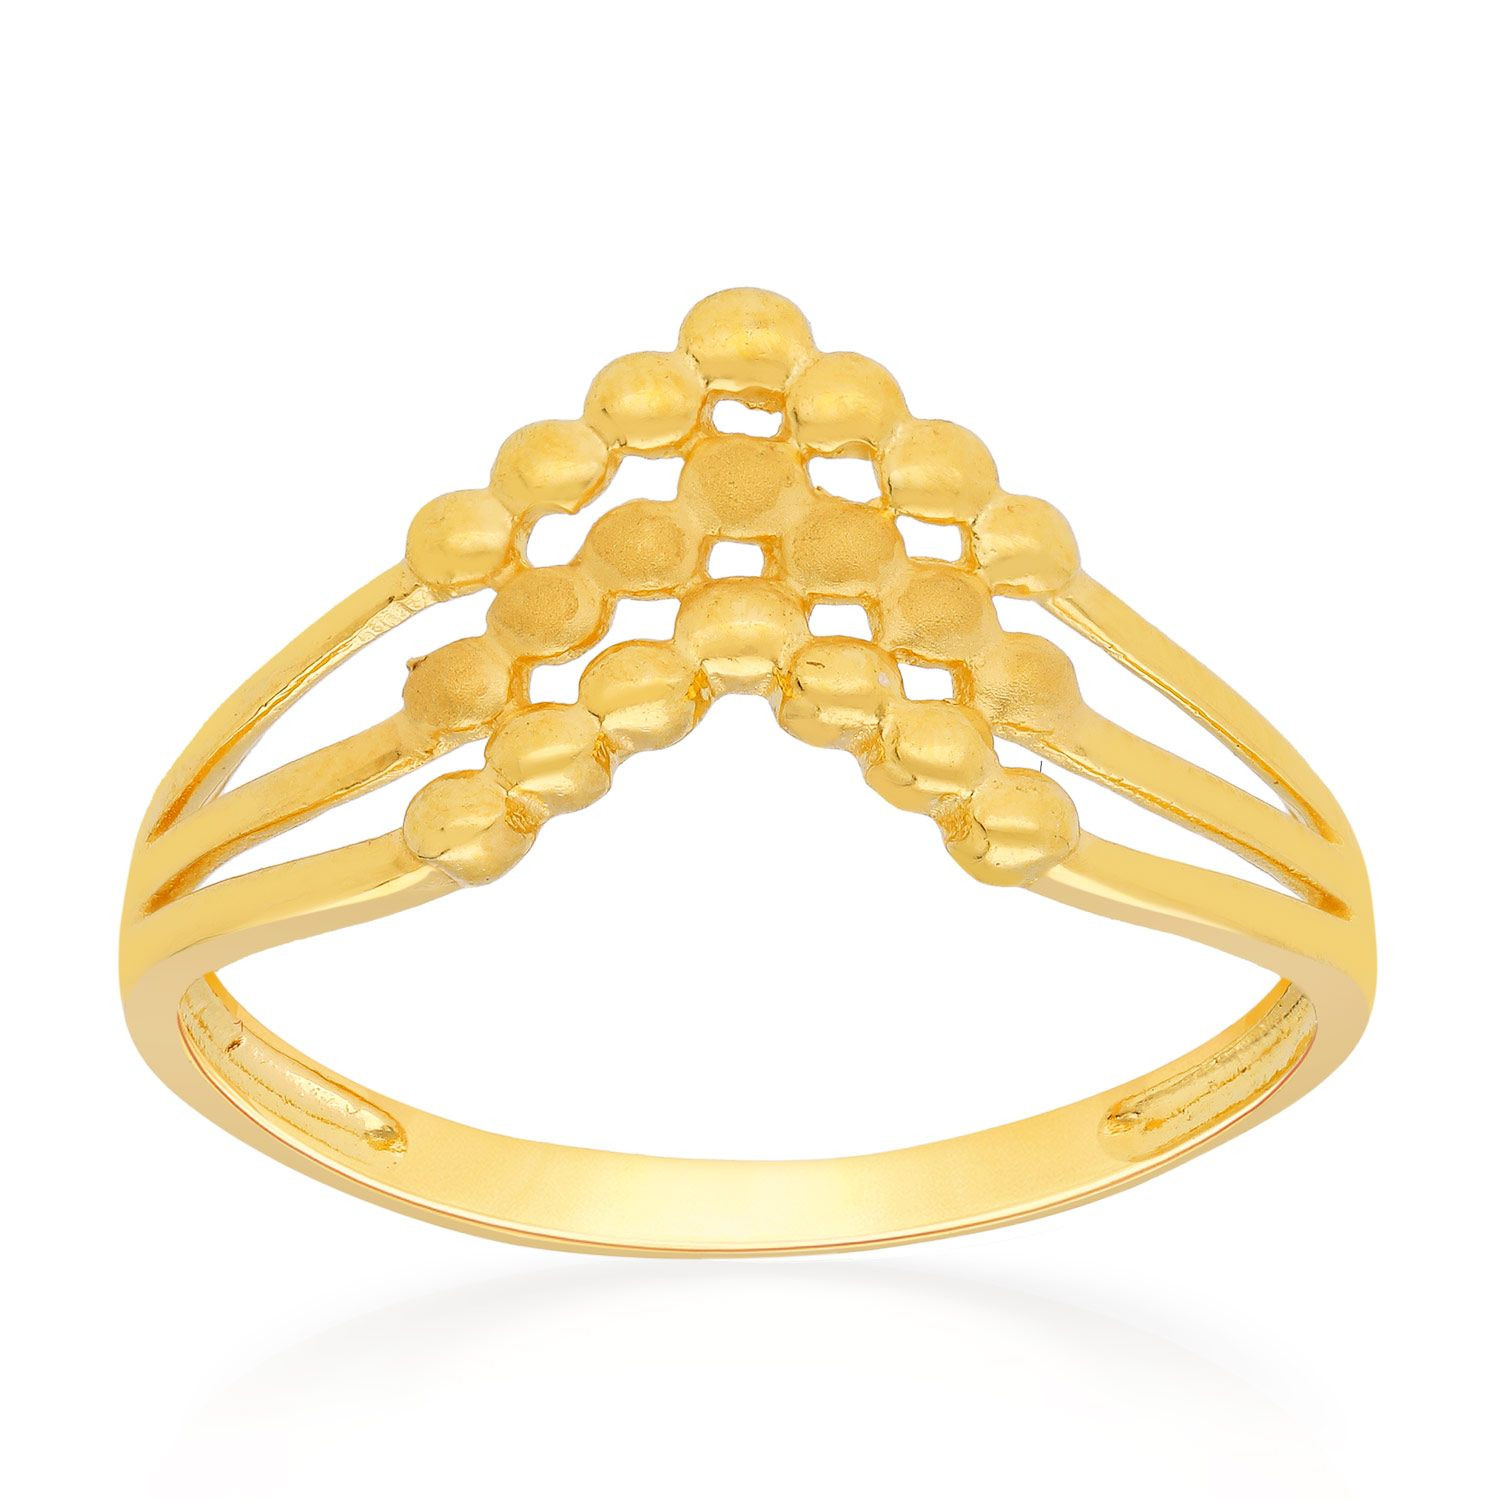 Malabar 22 KT Gold Studded Casual Ring FRGEDZRURGW734